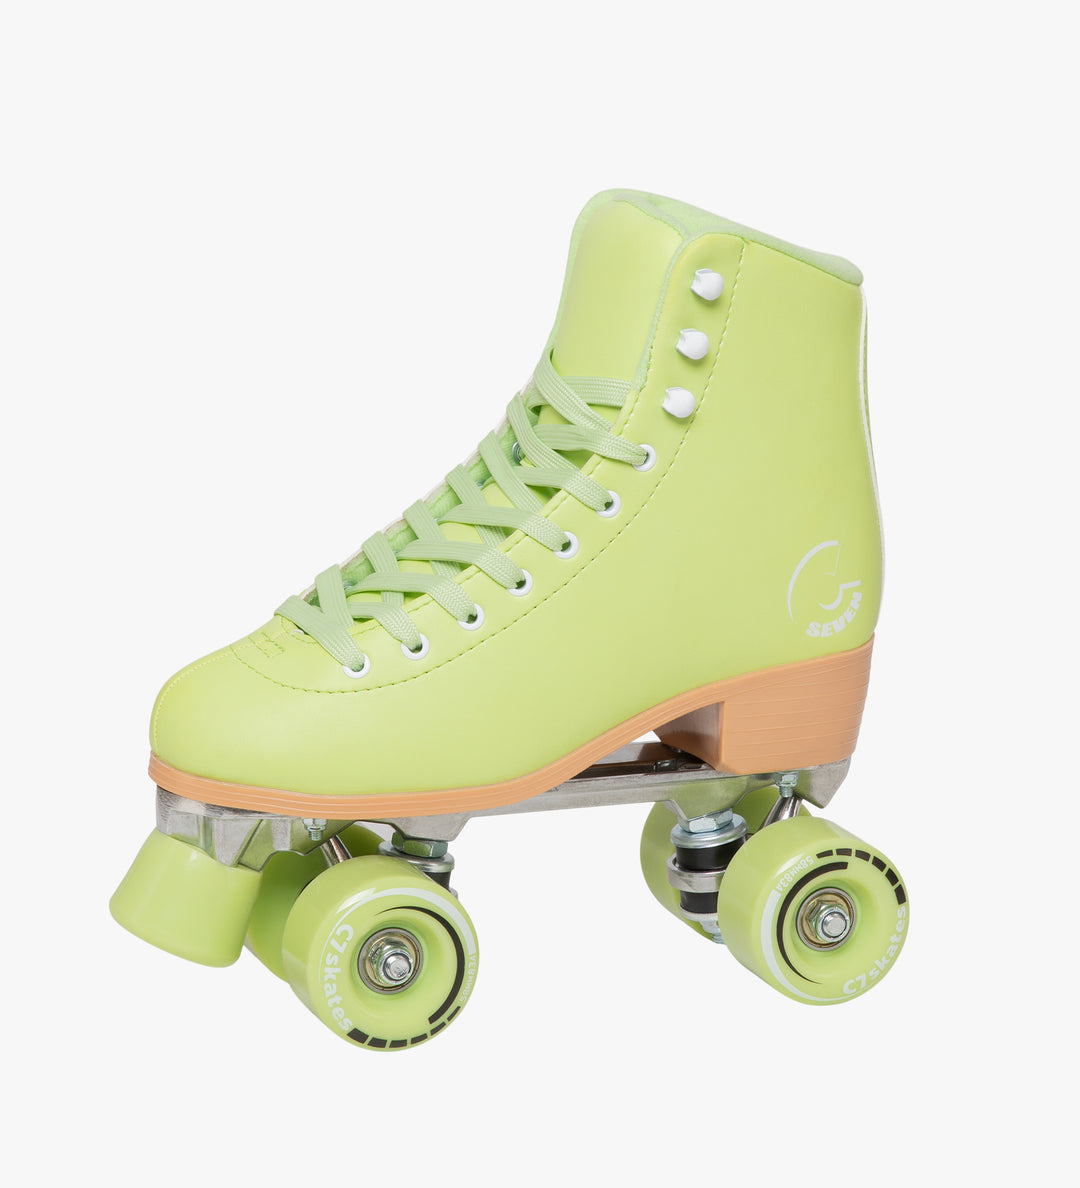 C7skates C7 Matcha green boot quad roller skates for women girls men with outdoor 58mm wheels 